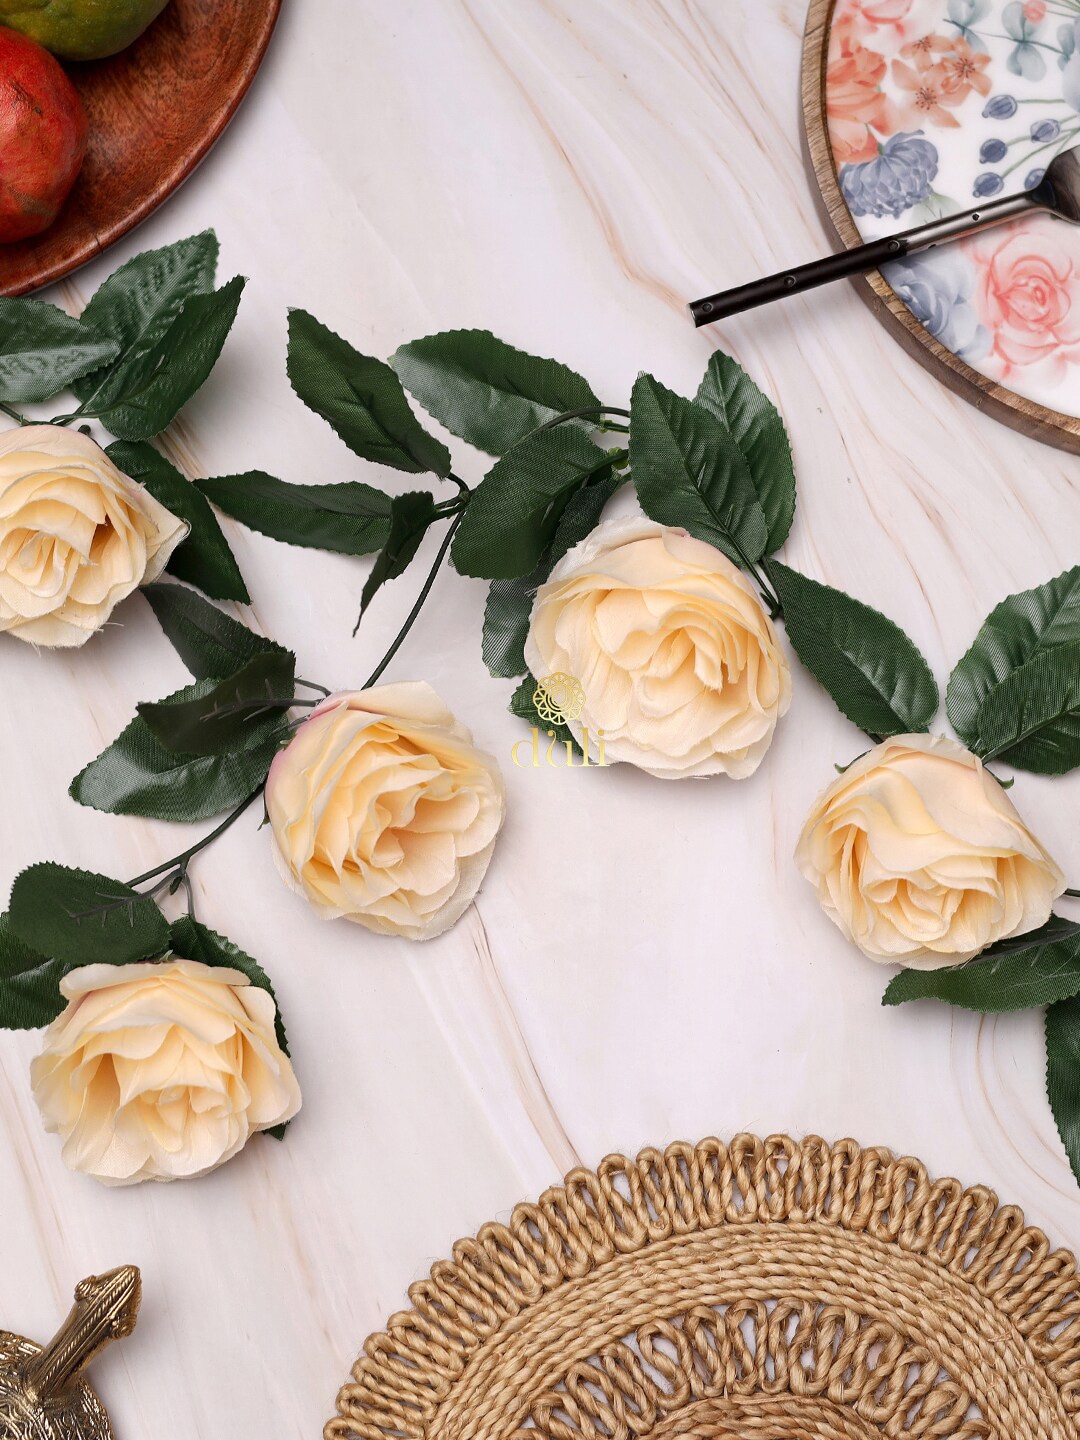 DULI Cream & Green Rose Artificial Flowers Decorative Vines Price in India